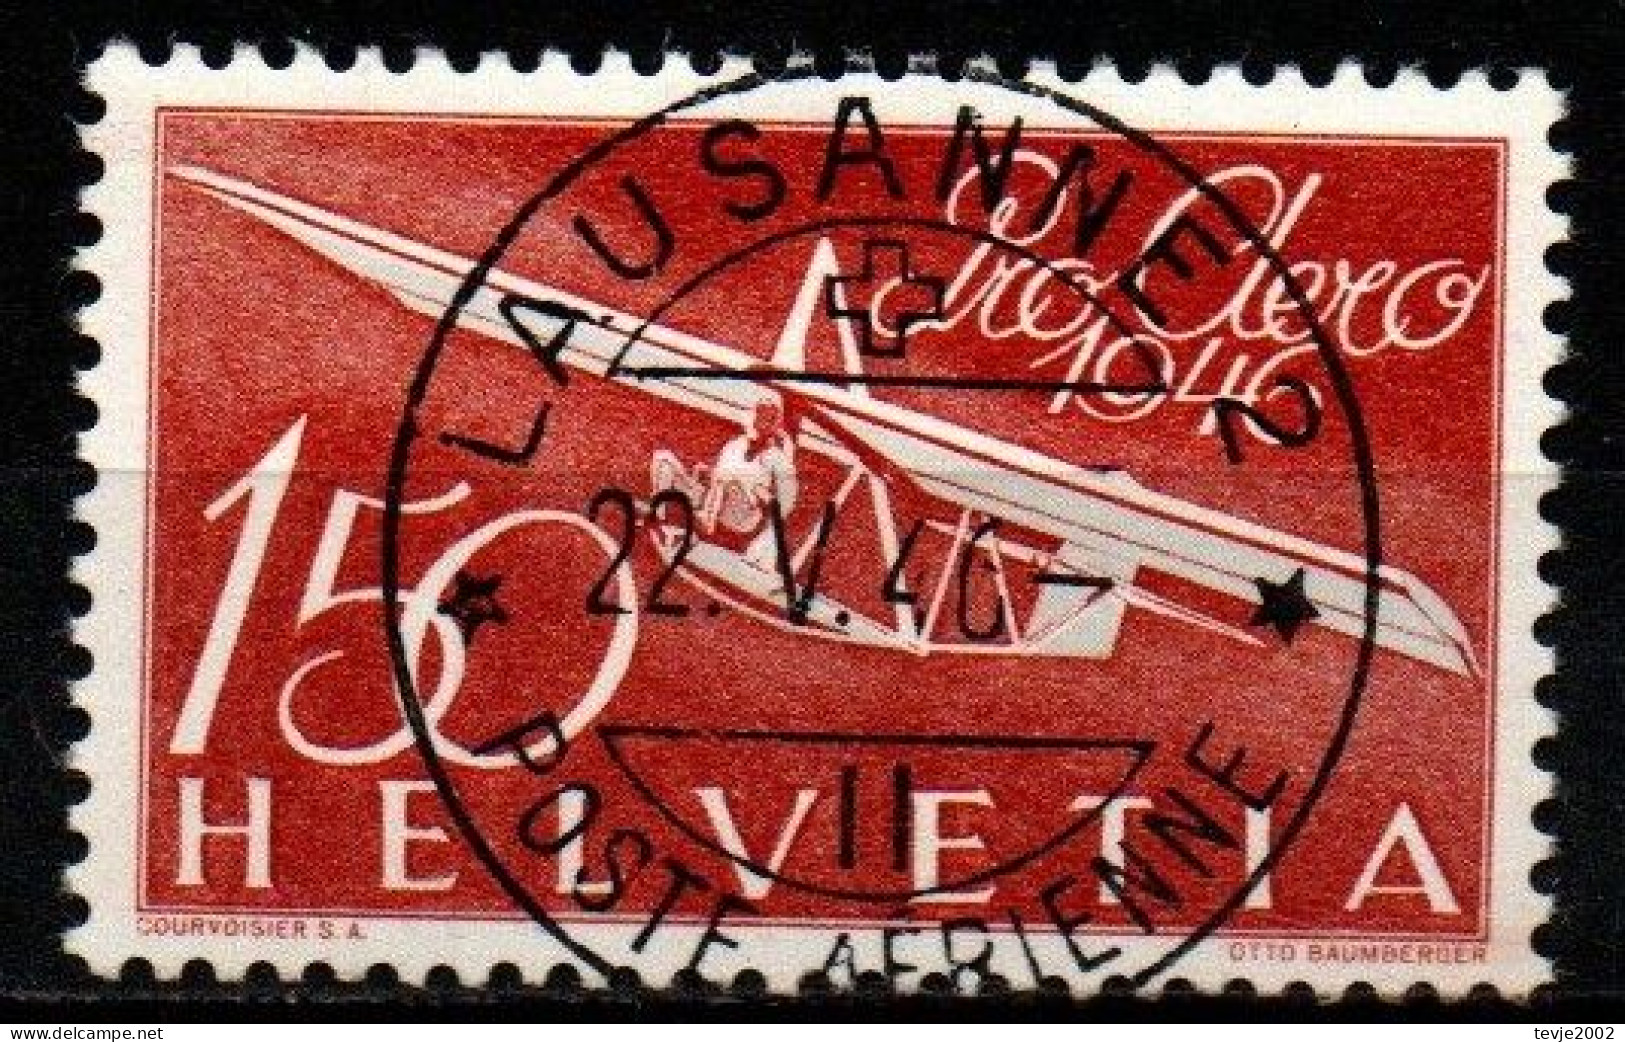 Schweiz 1946 - Mi.Nr. 470 - Gestempelt Used - Oblitérés